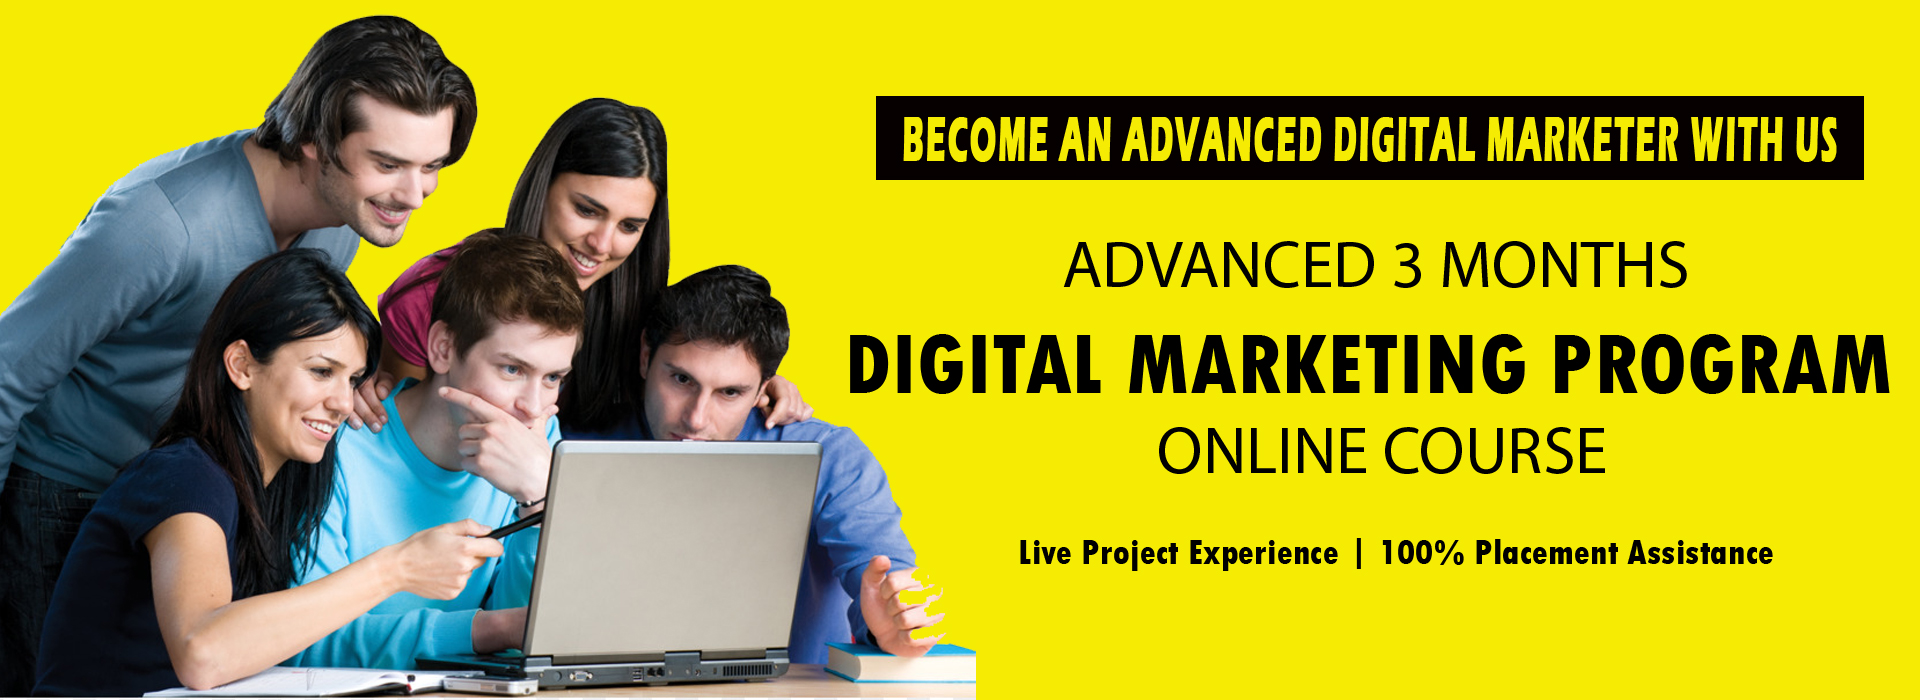 Top Digital Marketing Courses Online